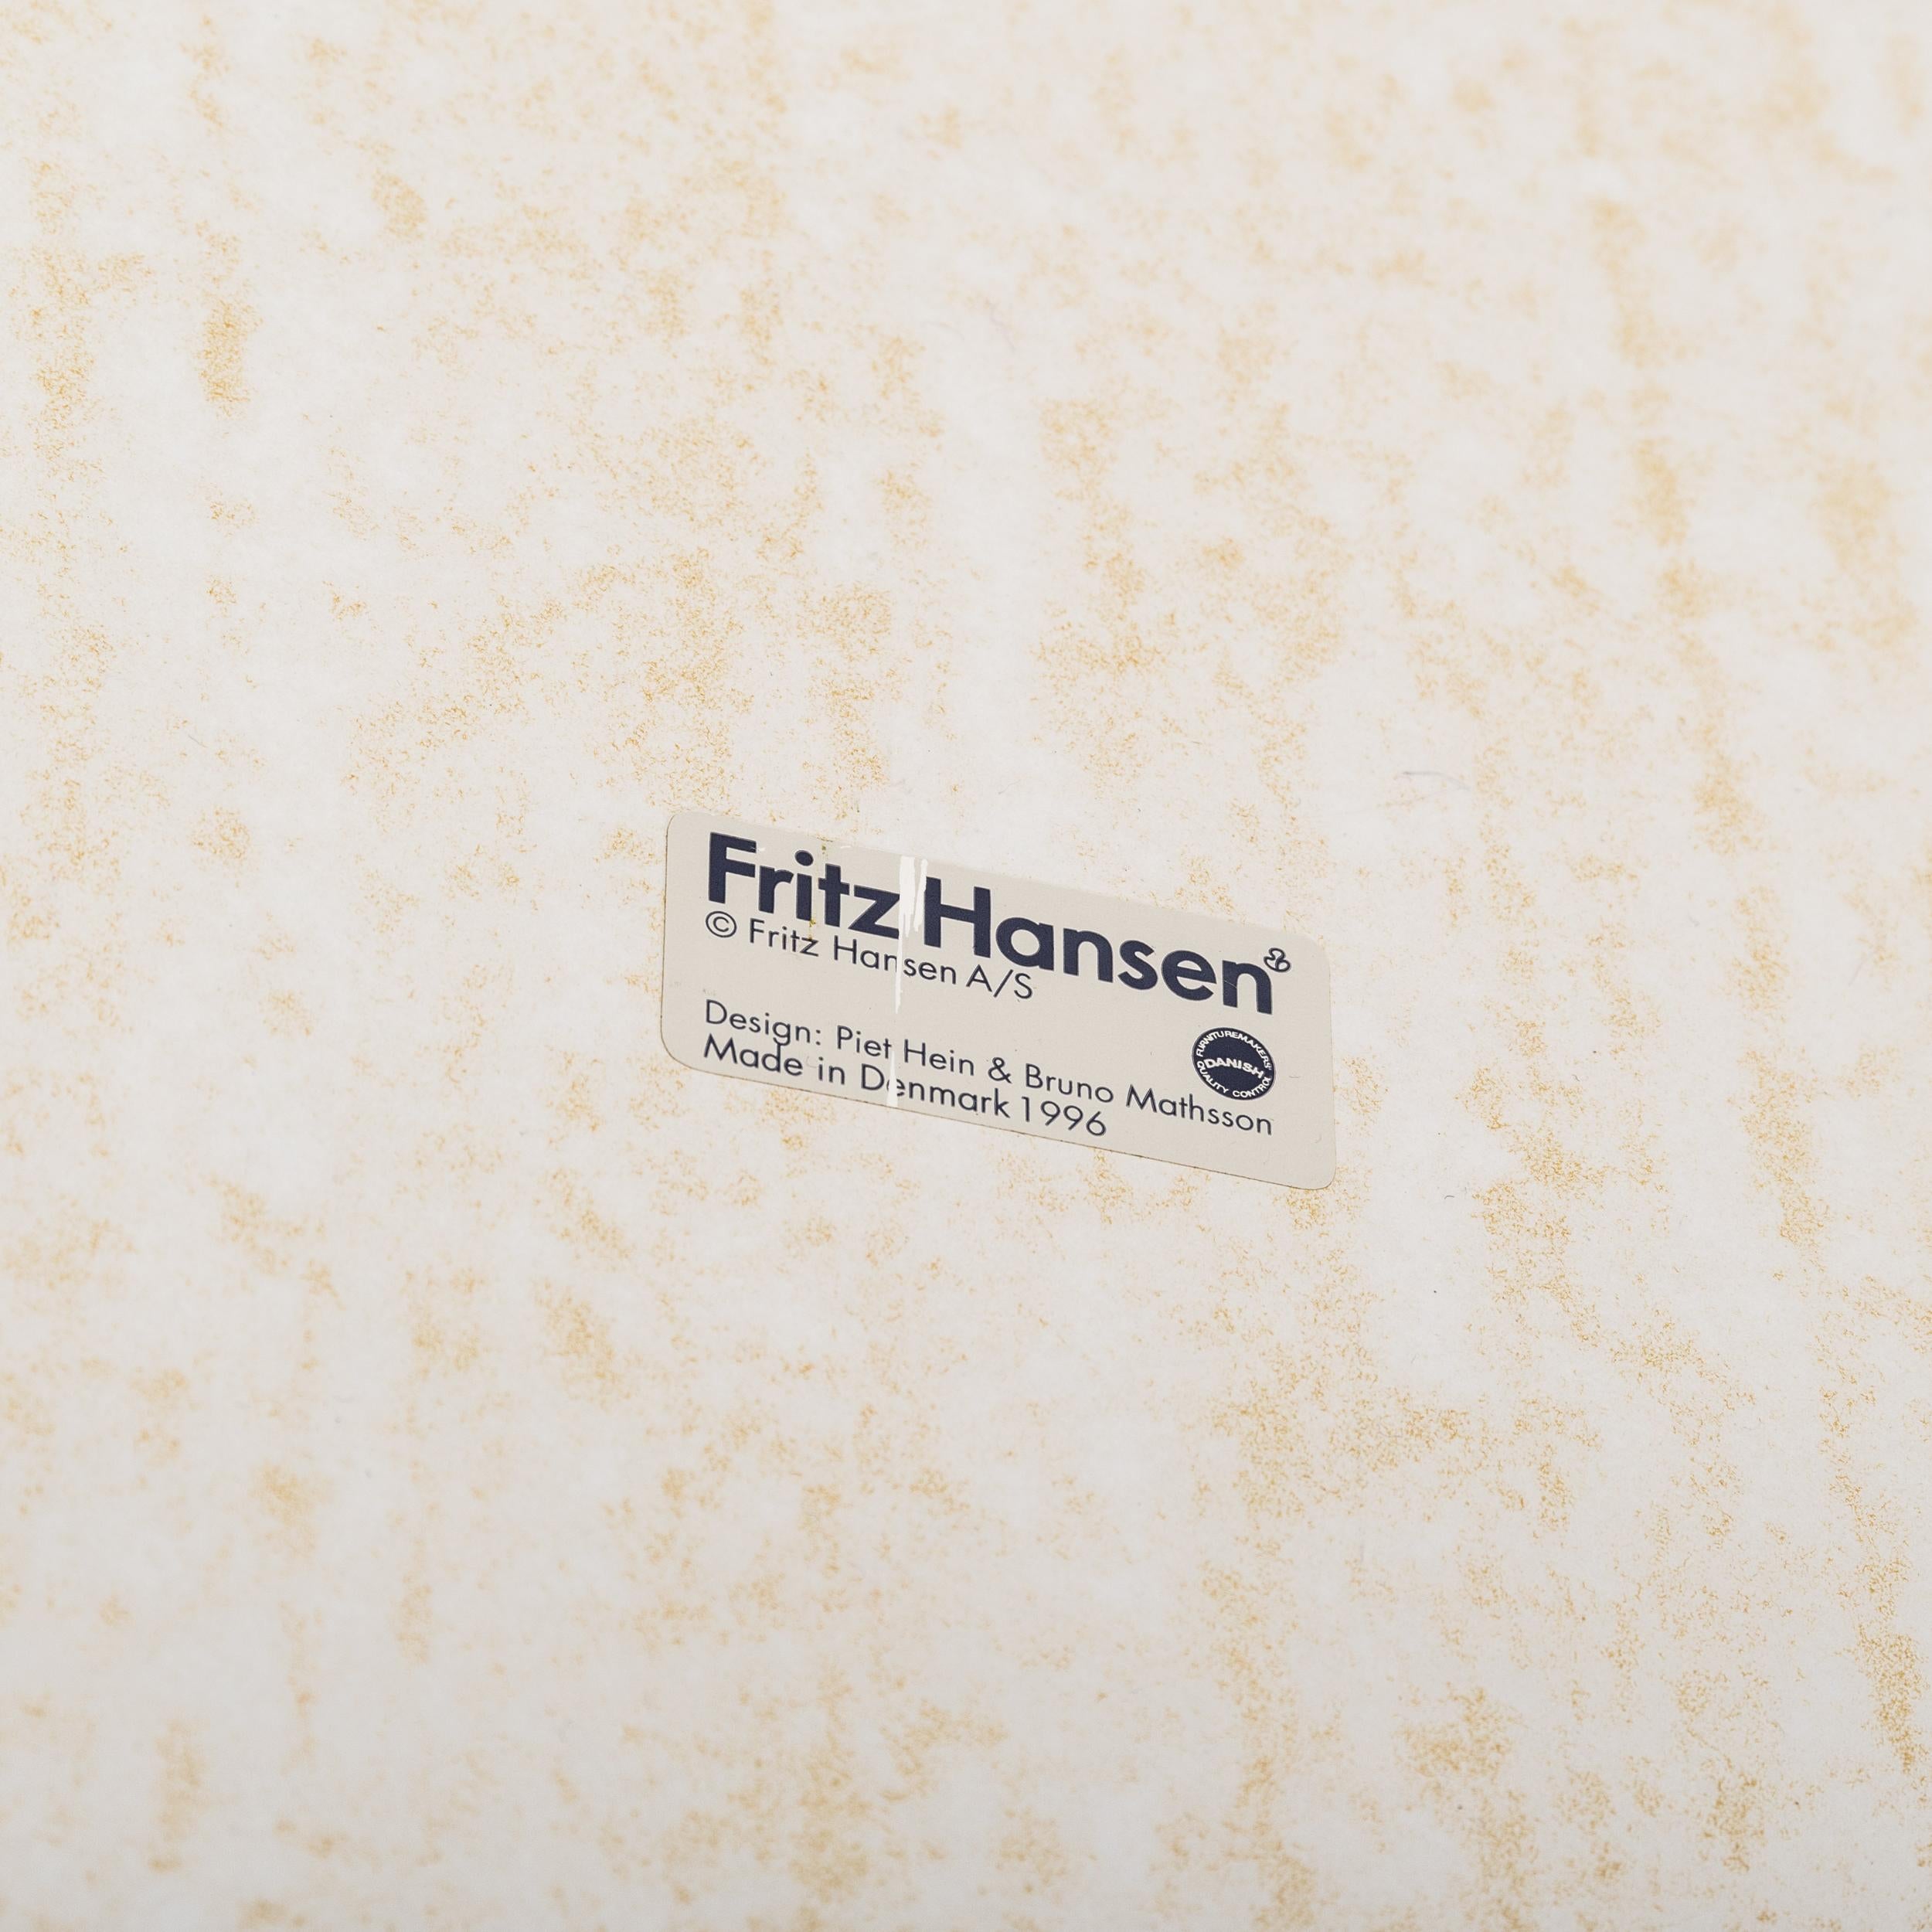 Late 20th Century Fritz Hansen by Piet Hein and Bruno Mathsson White Super-Elliptic Table, 1996